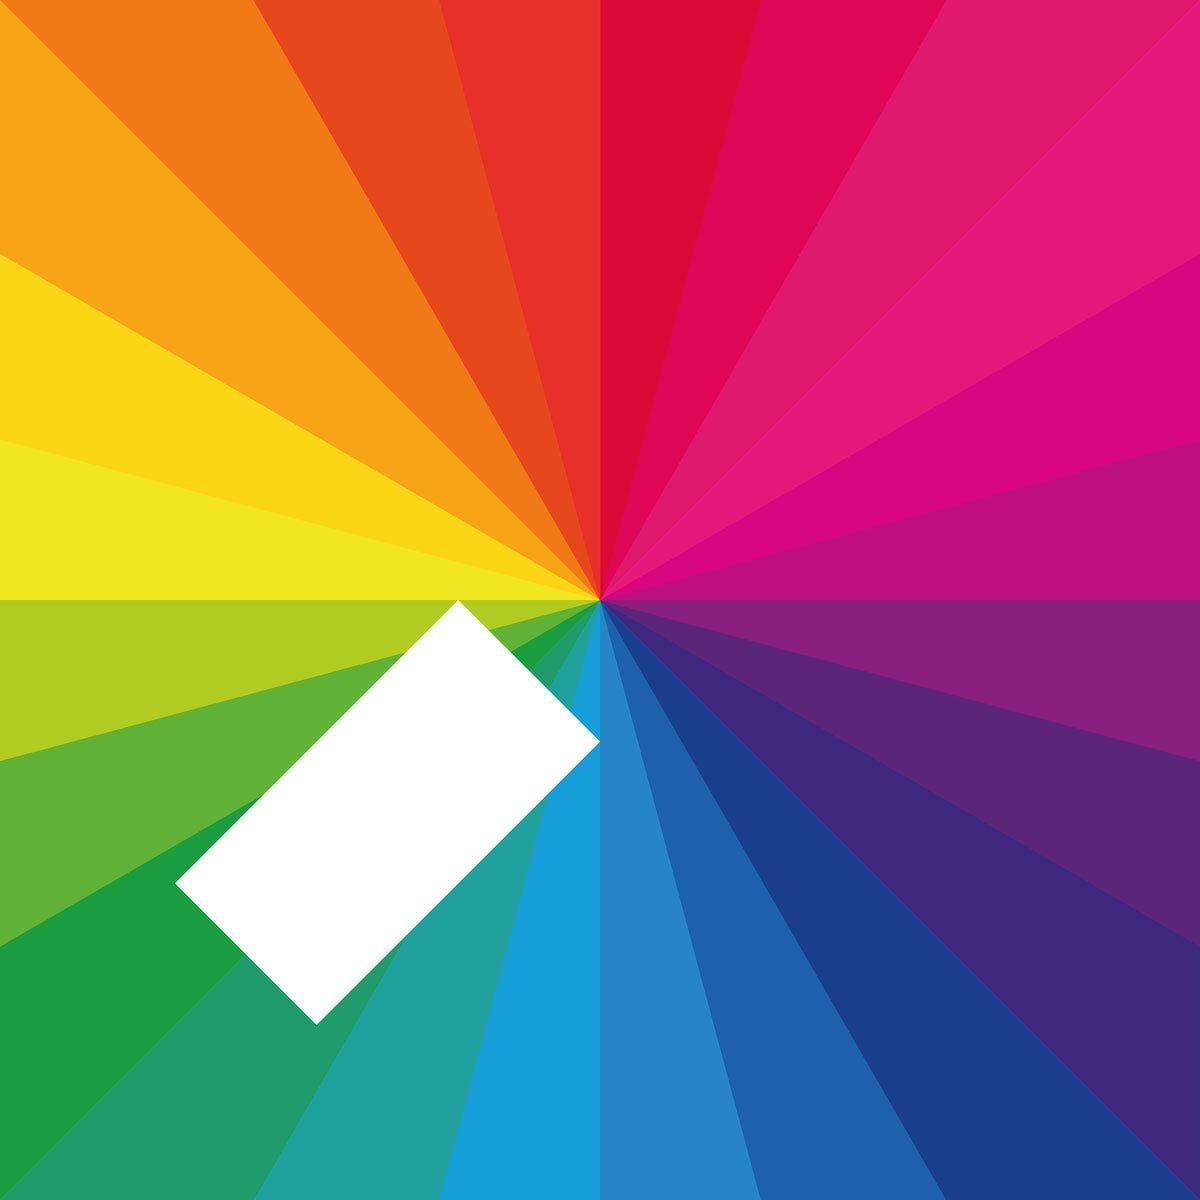 Jamie xxが初のソロアルバム『In Colour』を遂にリリース